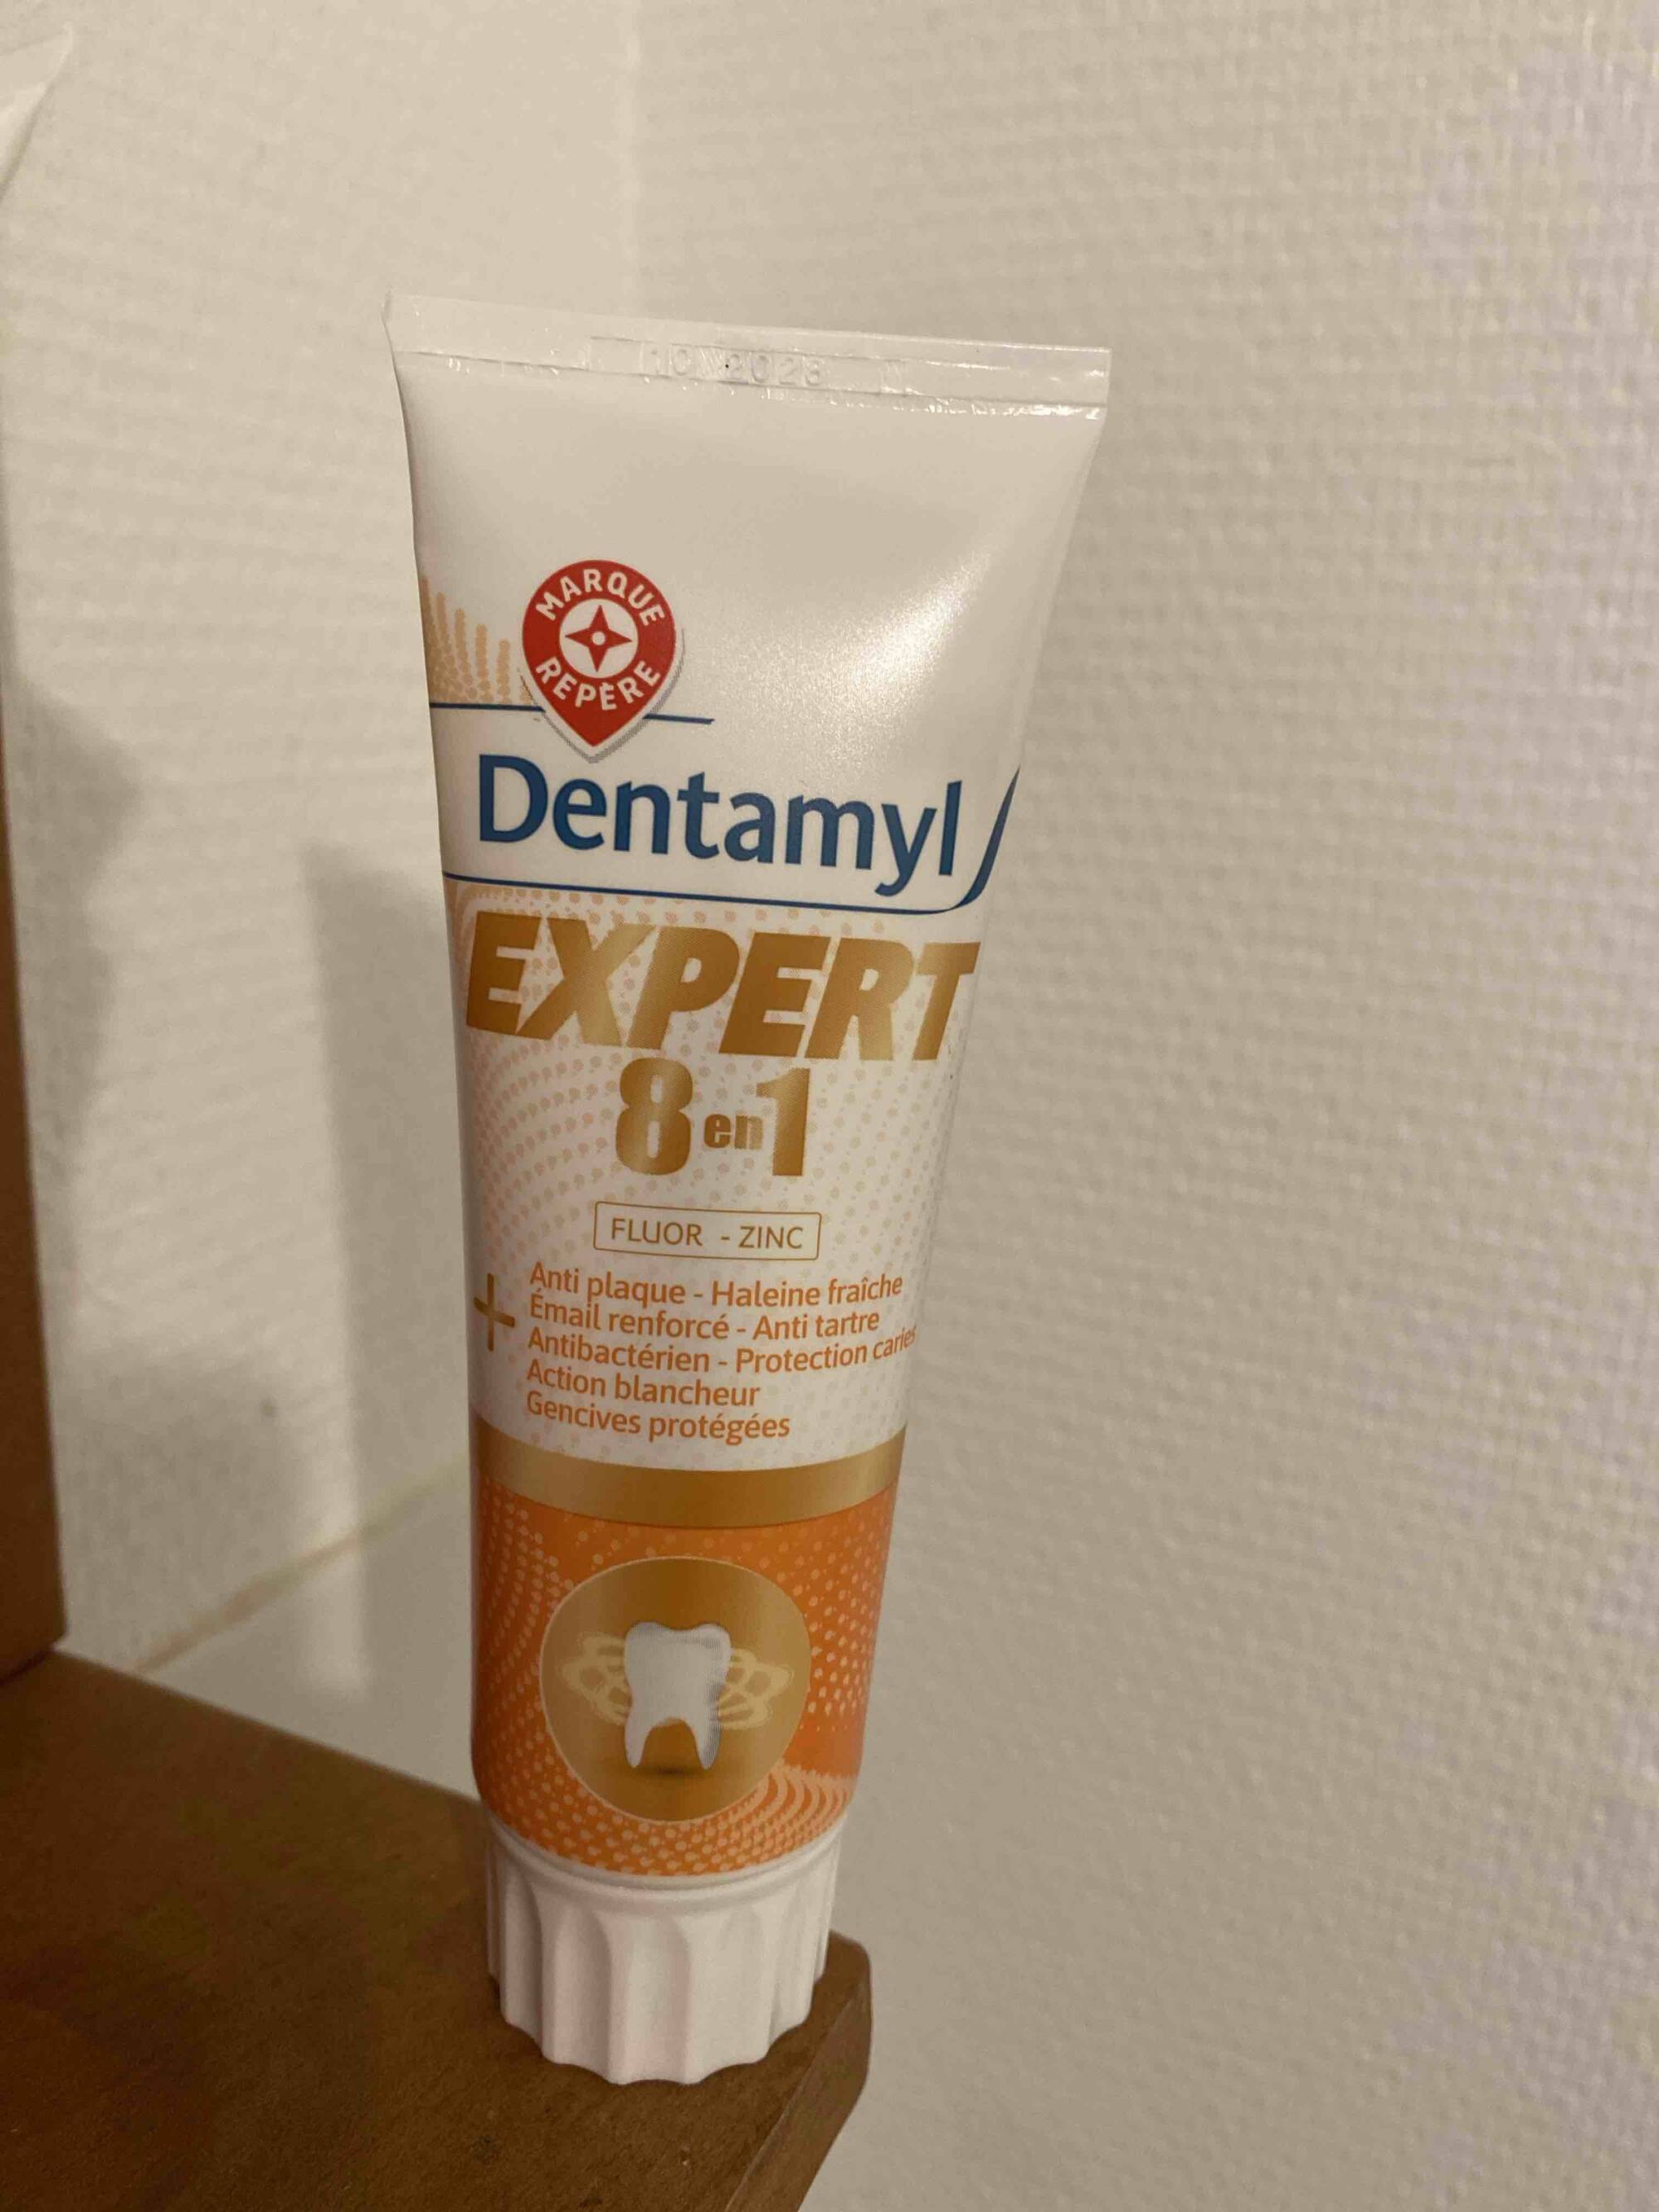 DENTAMYL - Dentamyl dentifrice expert 8 en 1